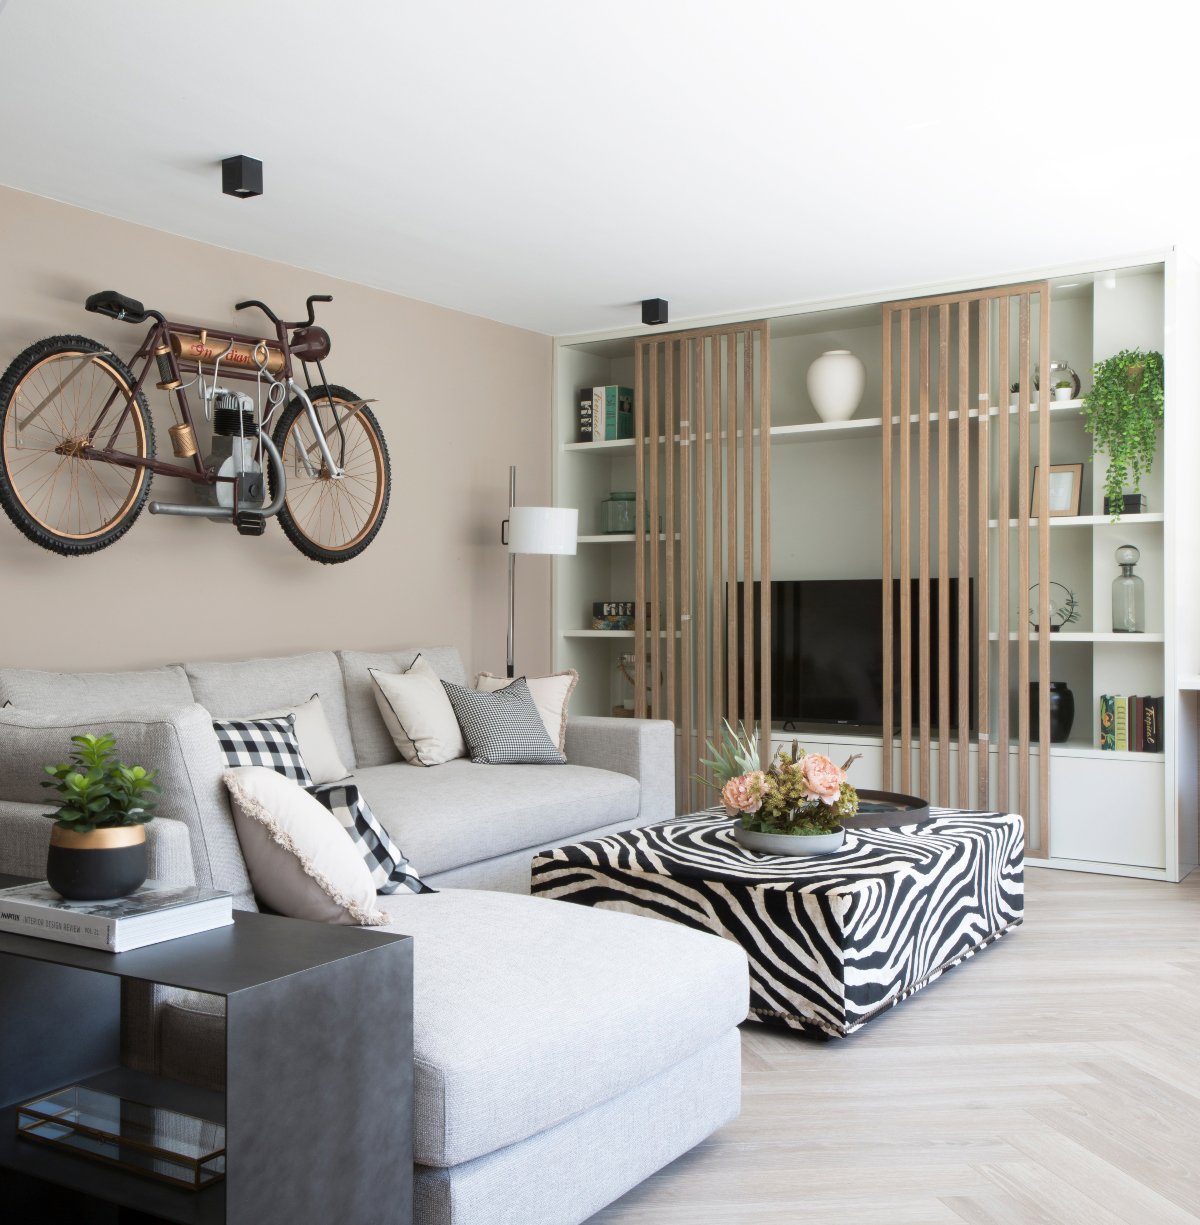 Salón pequeño con escultura de bicicleta, sofá gris y mesilla de cebra